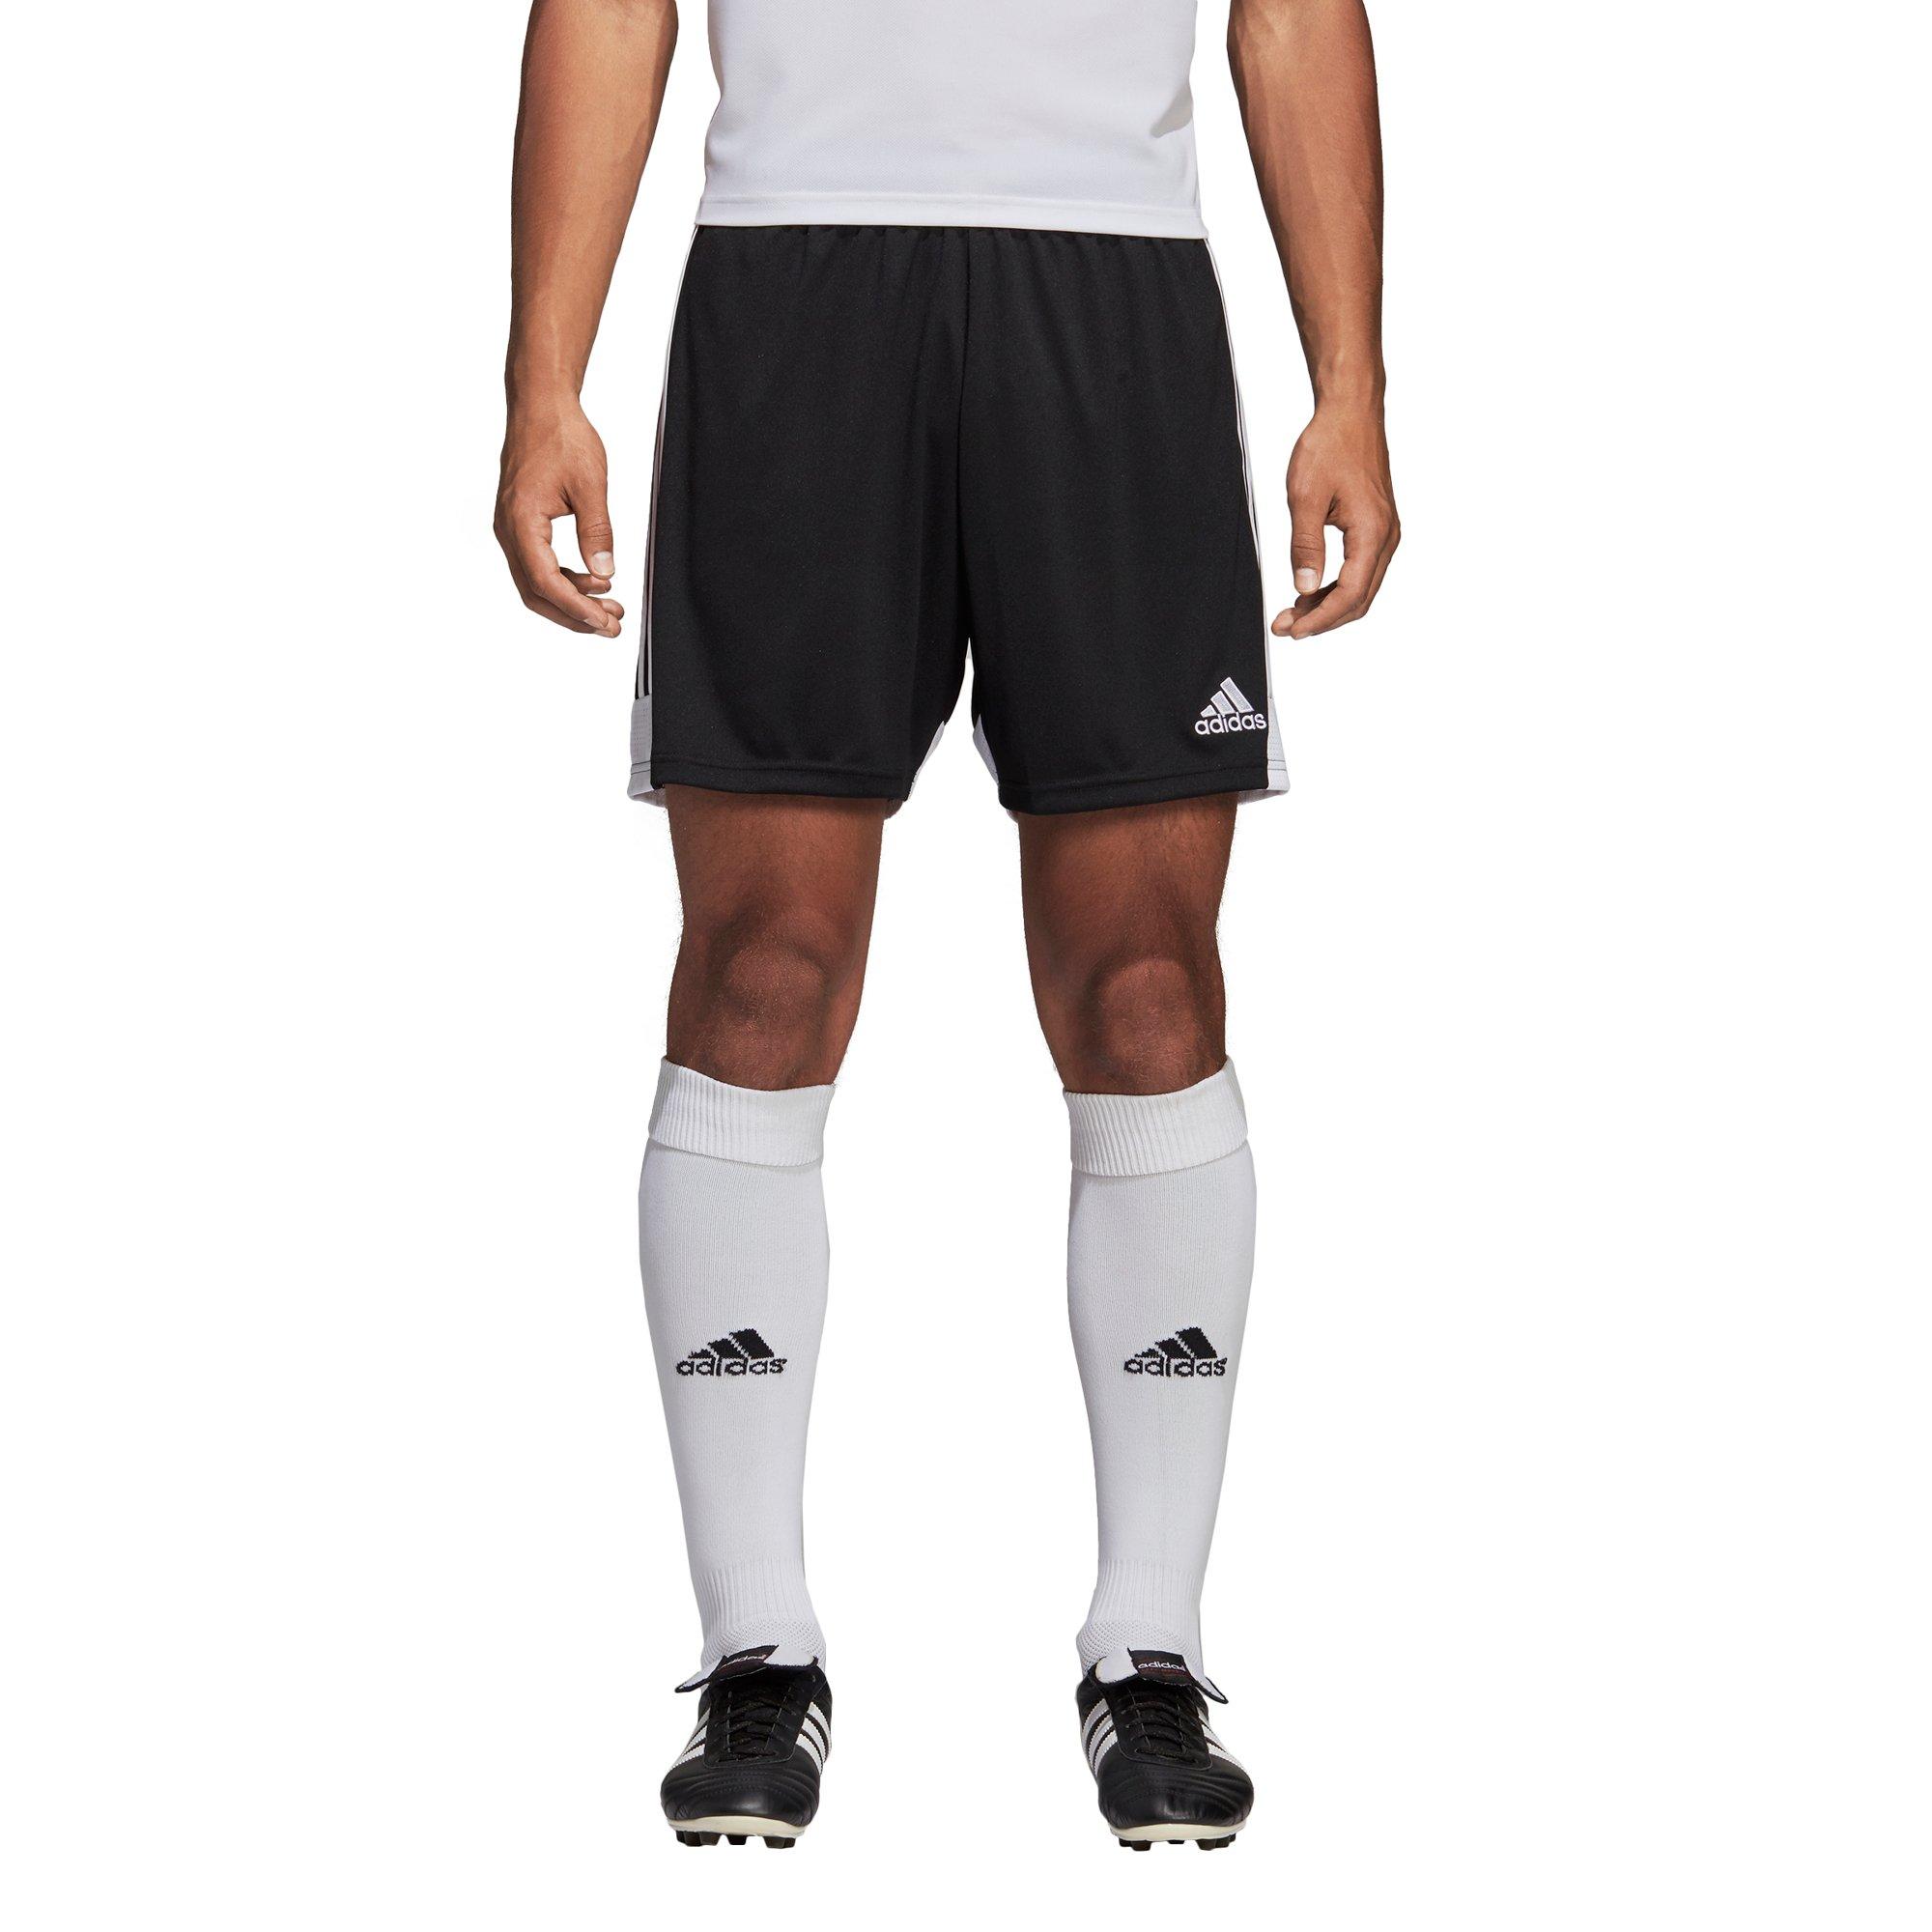 adidas soccer training shorts